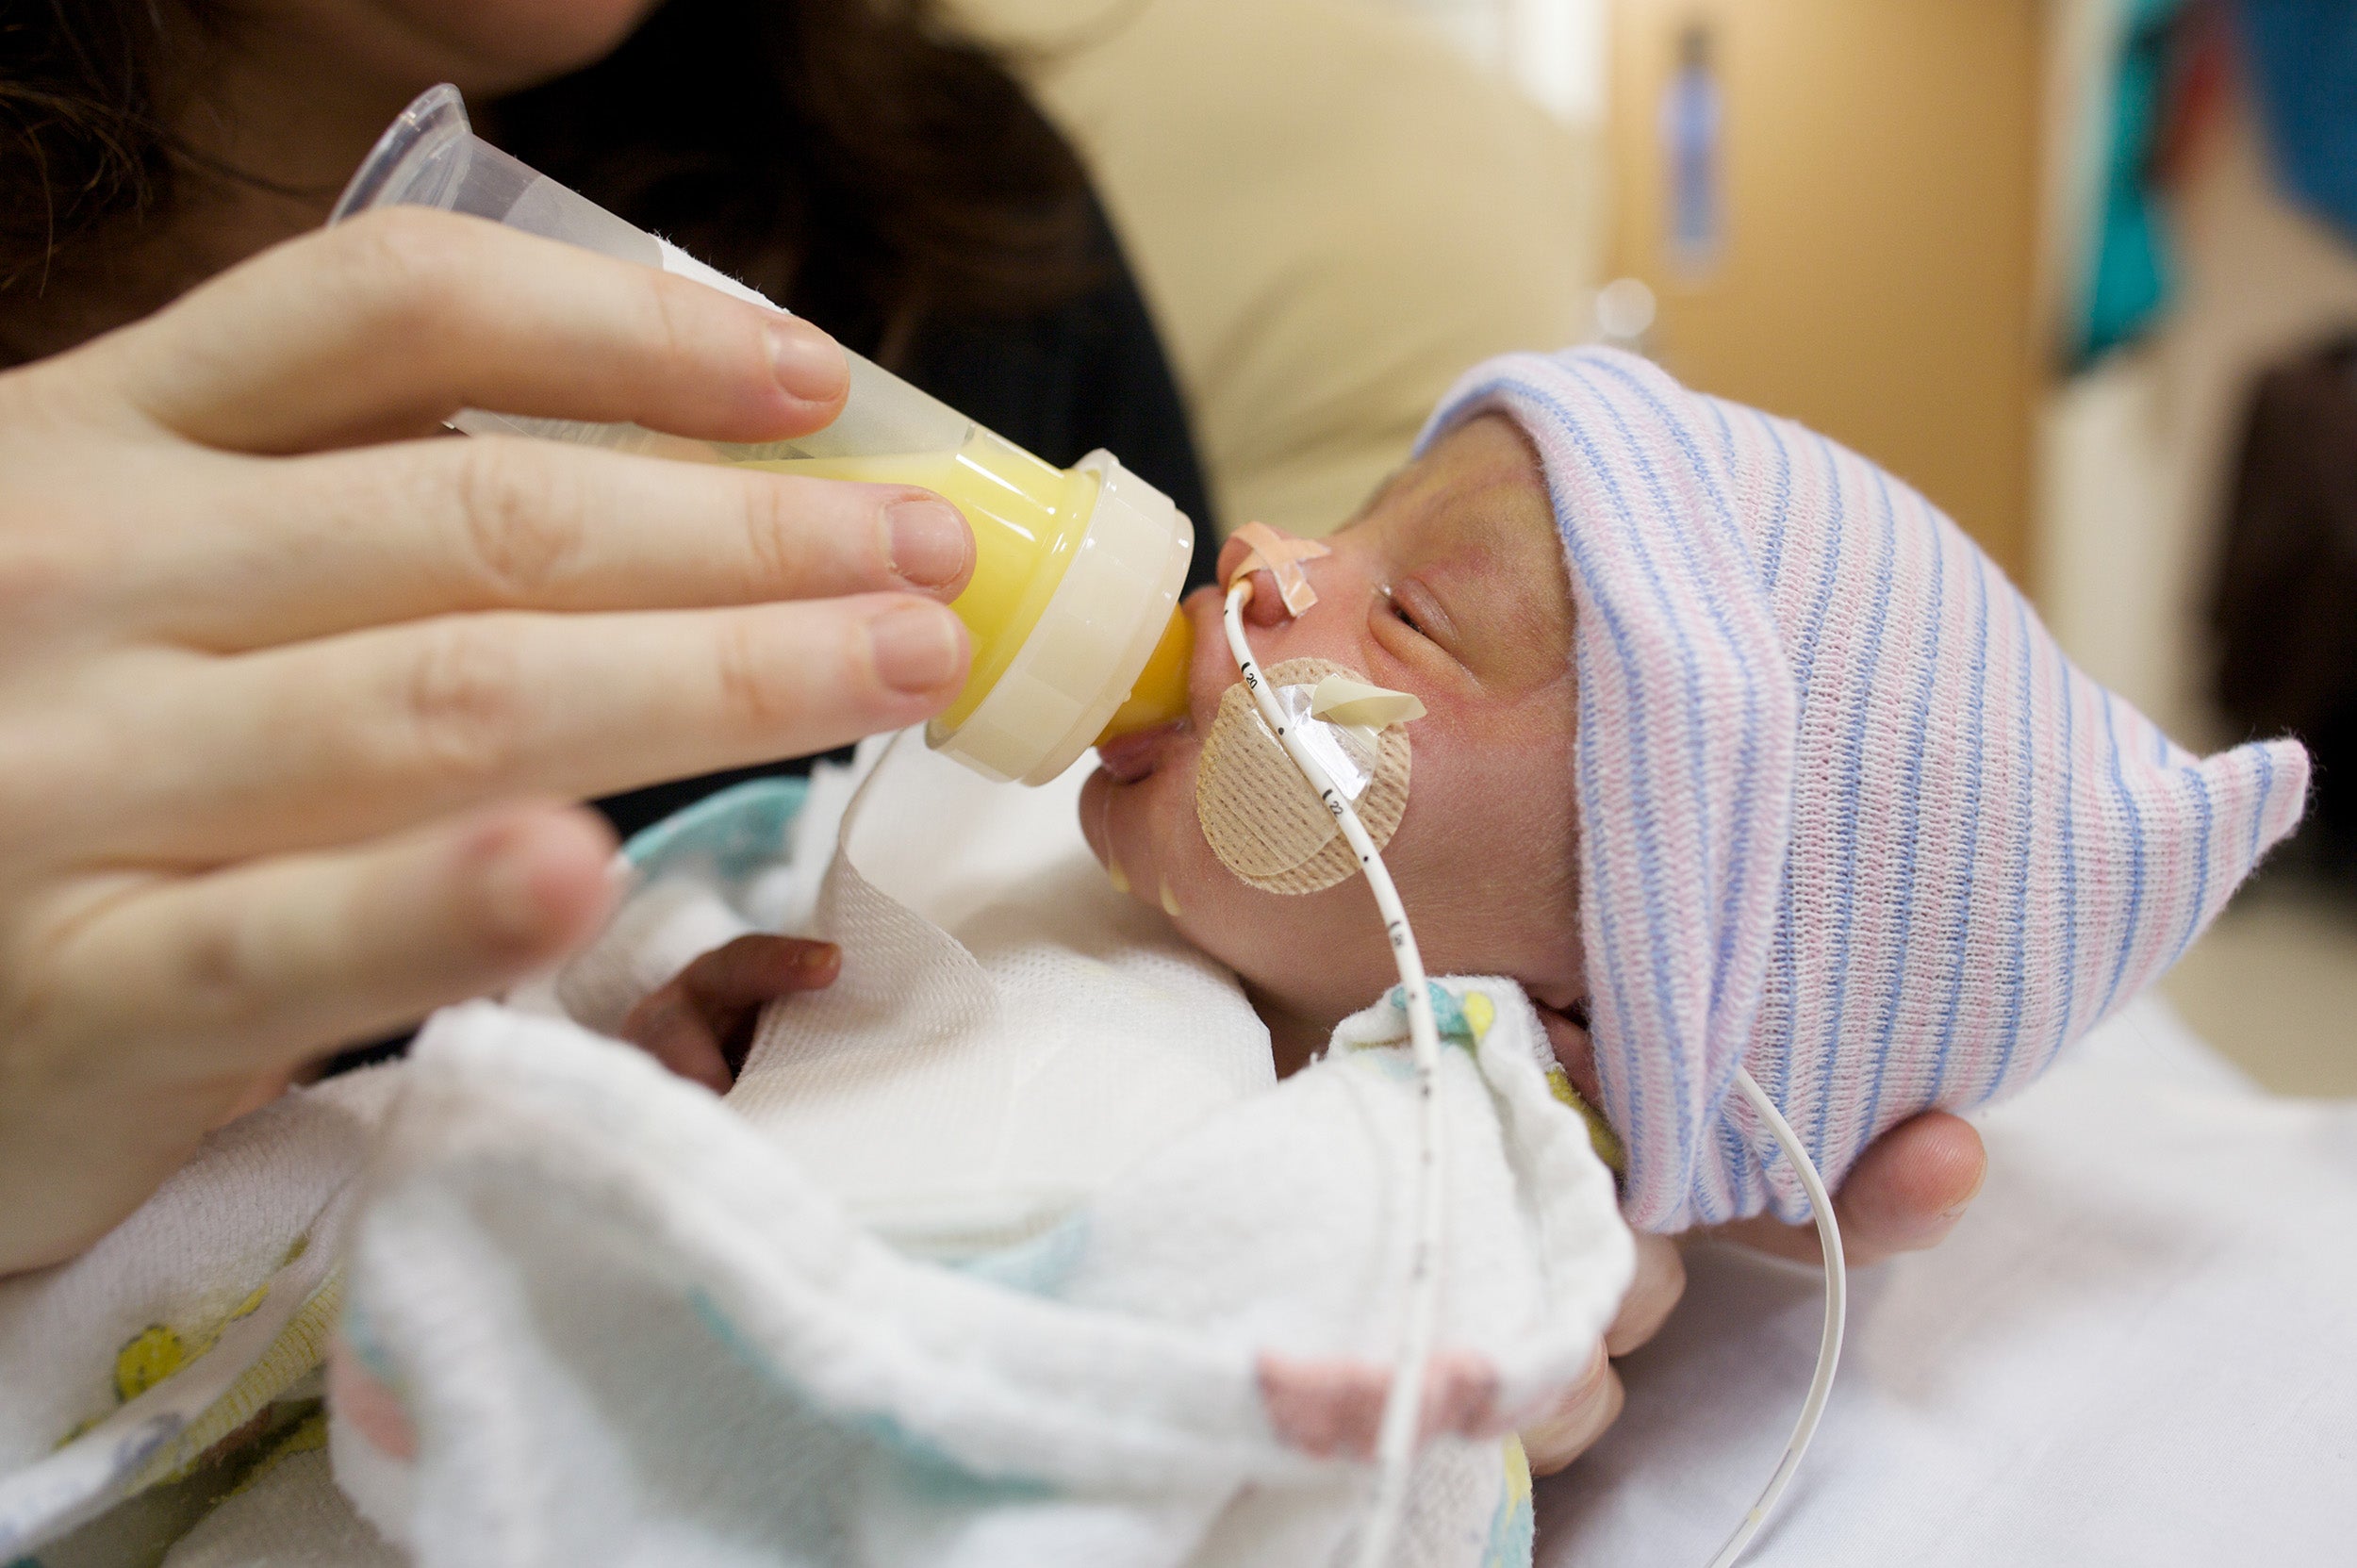 A premature baby feeding on breastmilk.